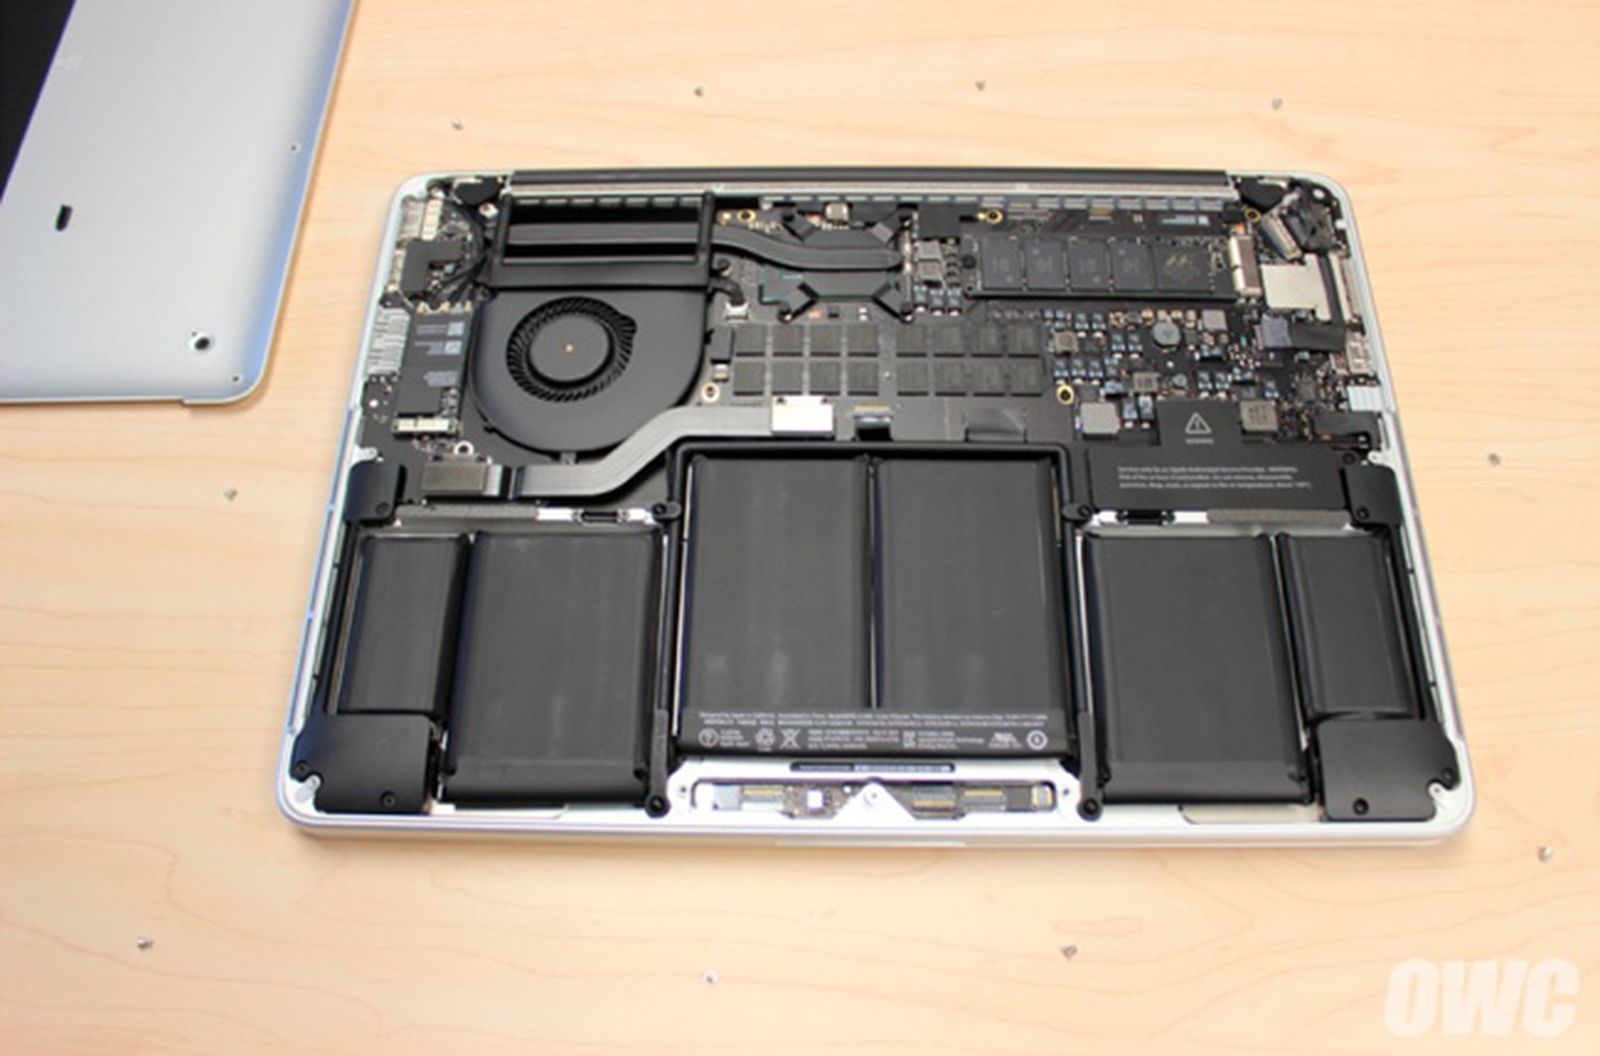 Bloom Furnace George Stevenson OWC Shares Mid-2014 Retina MacBook Pro Unboxing, SSD Tests - MacRumors